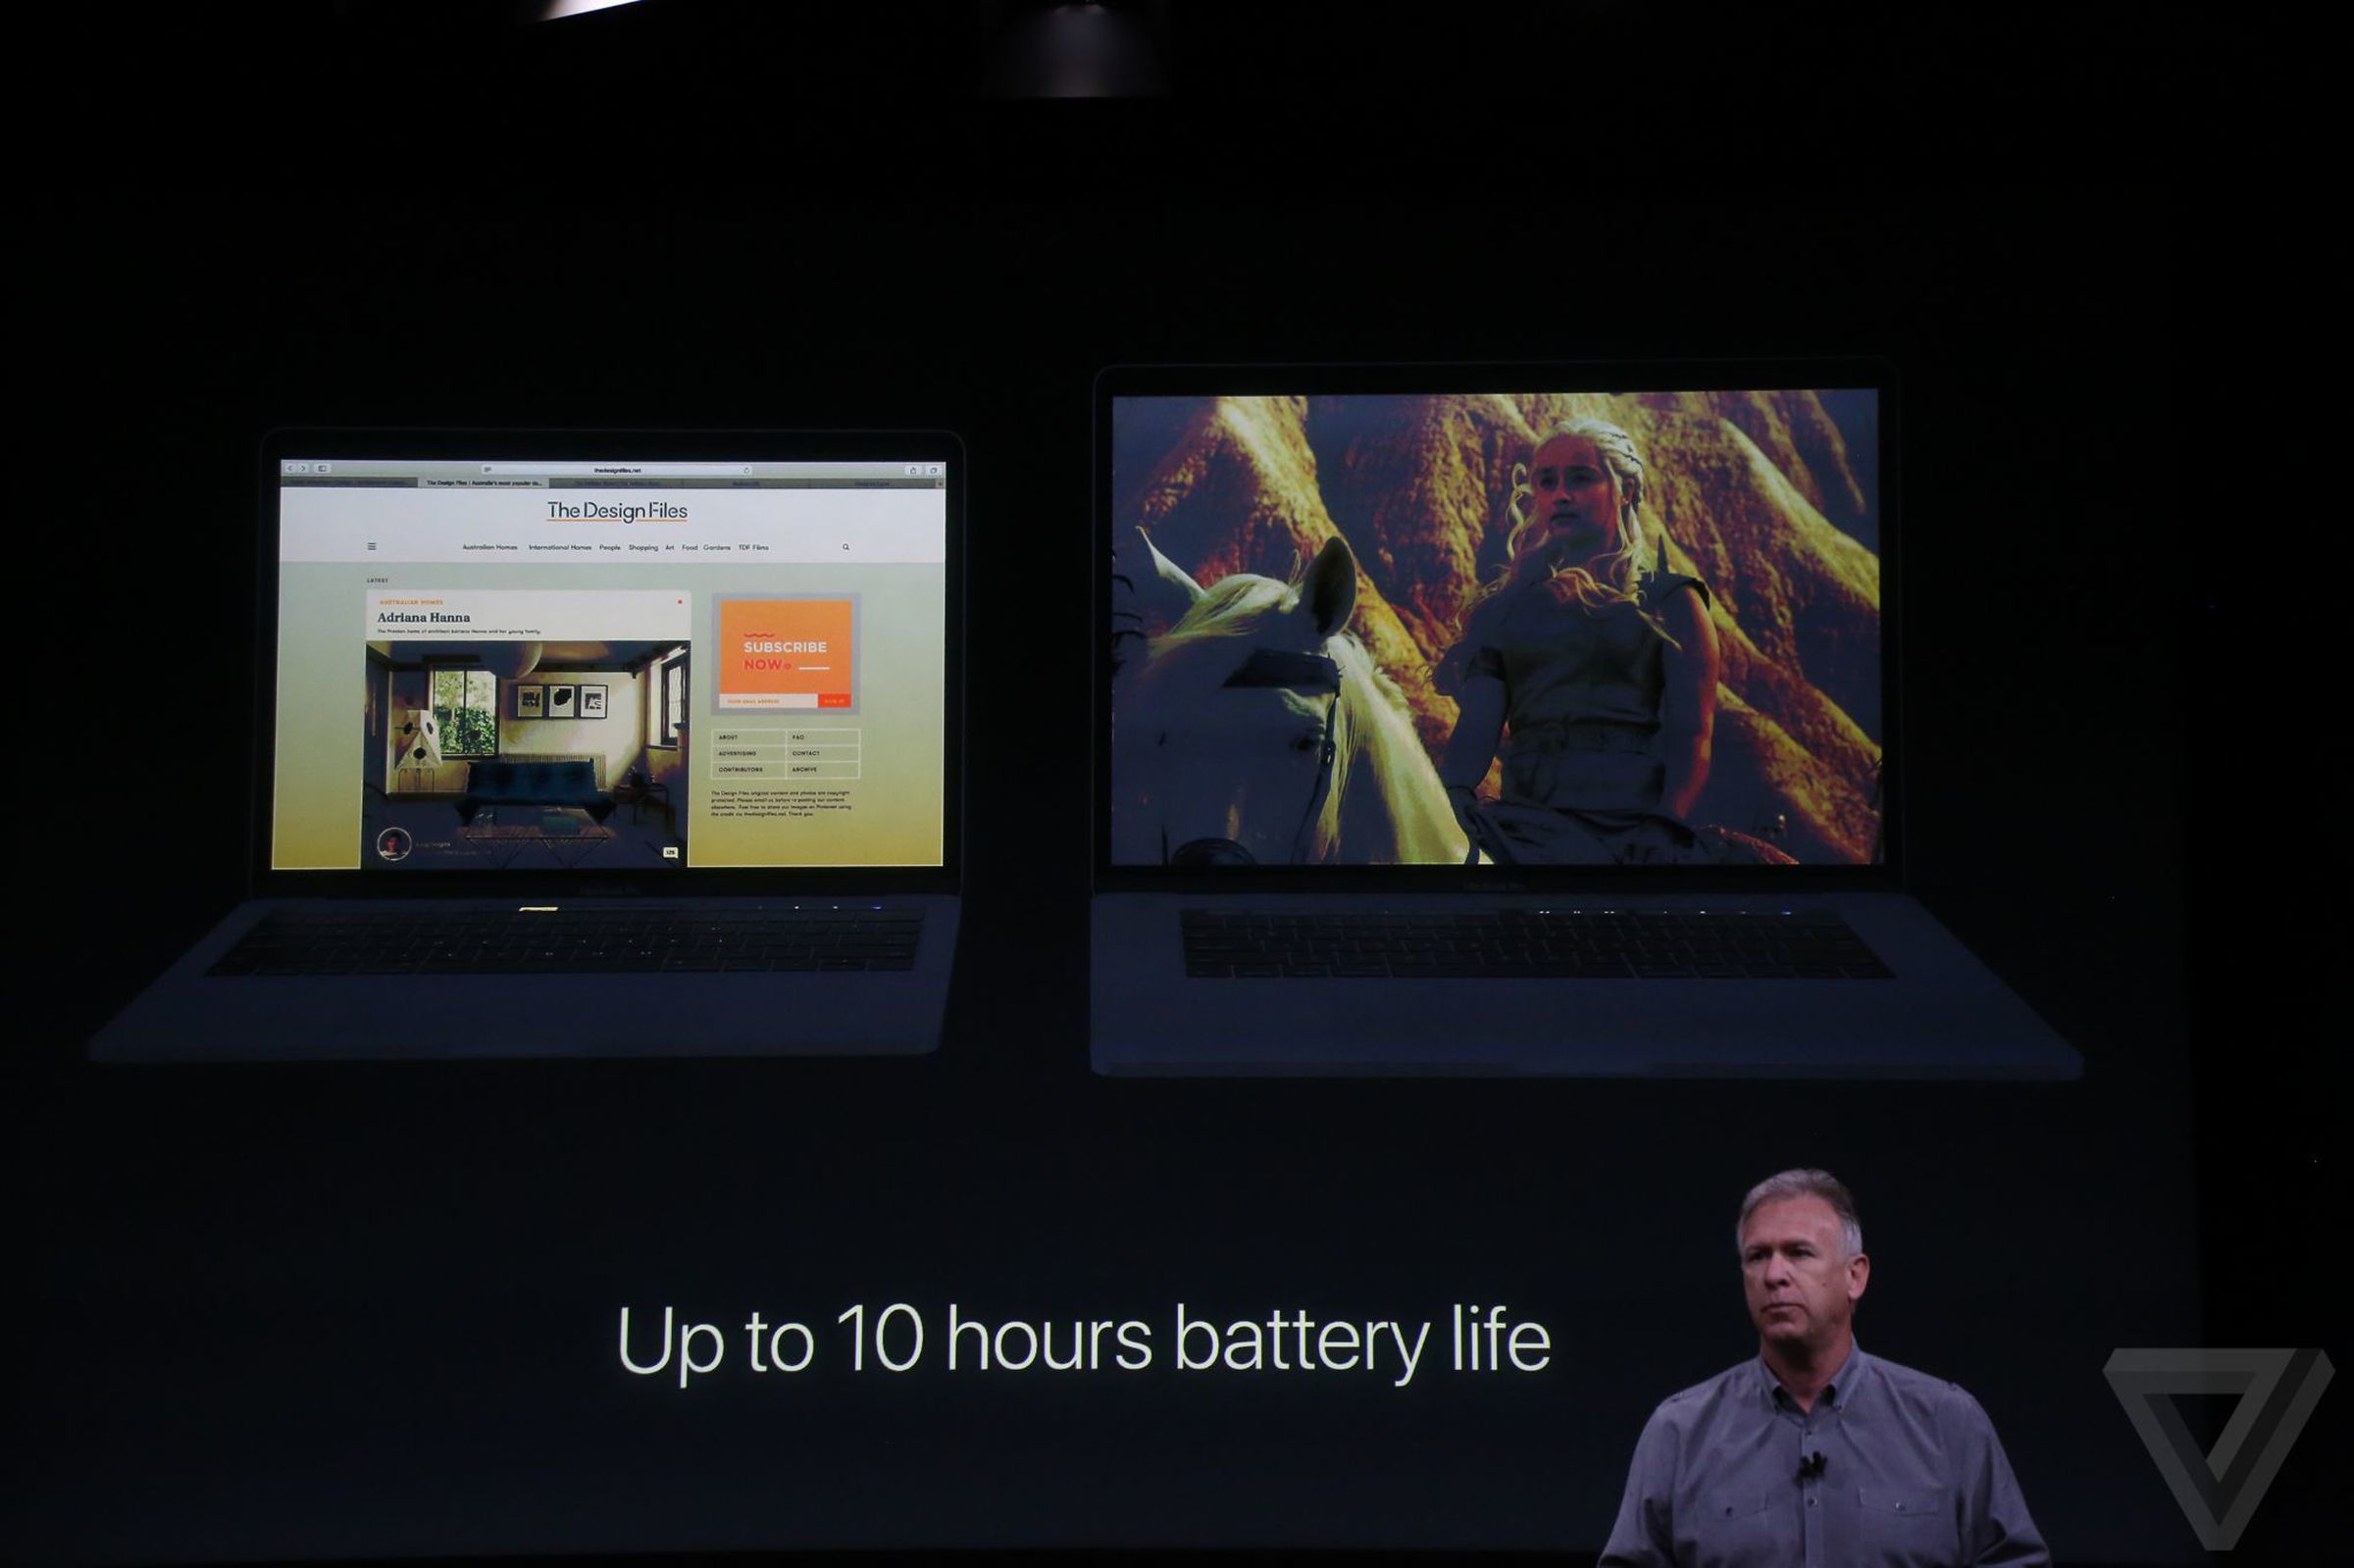 MacBook Pro announcement photos